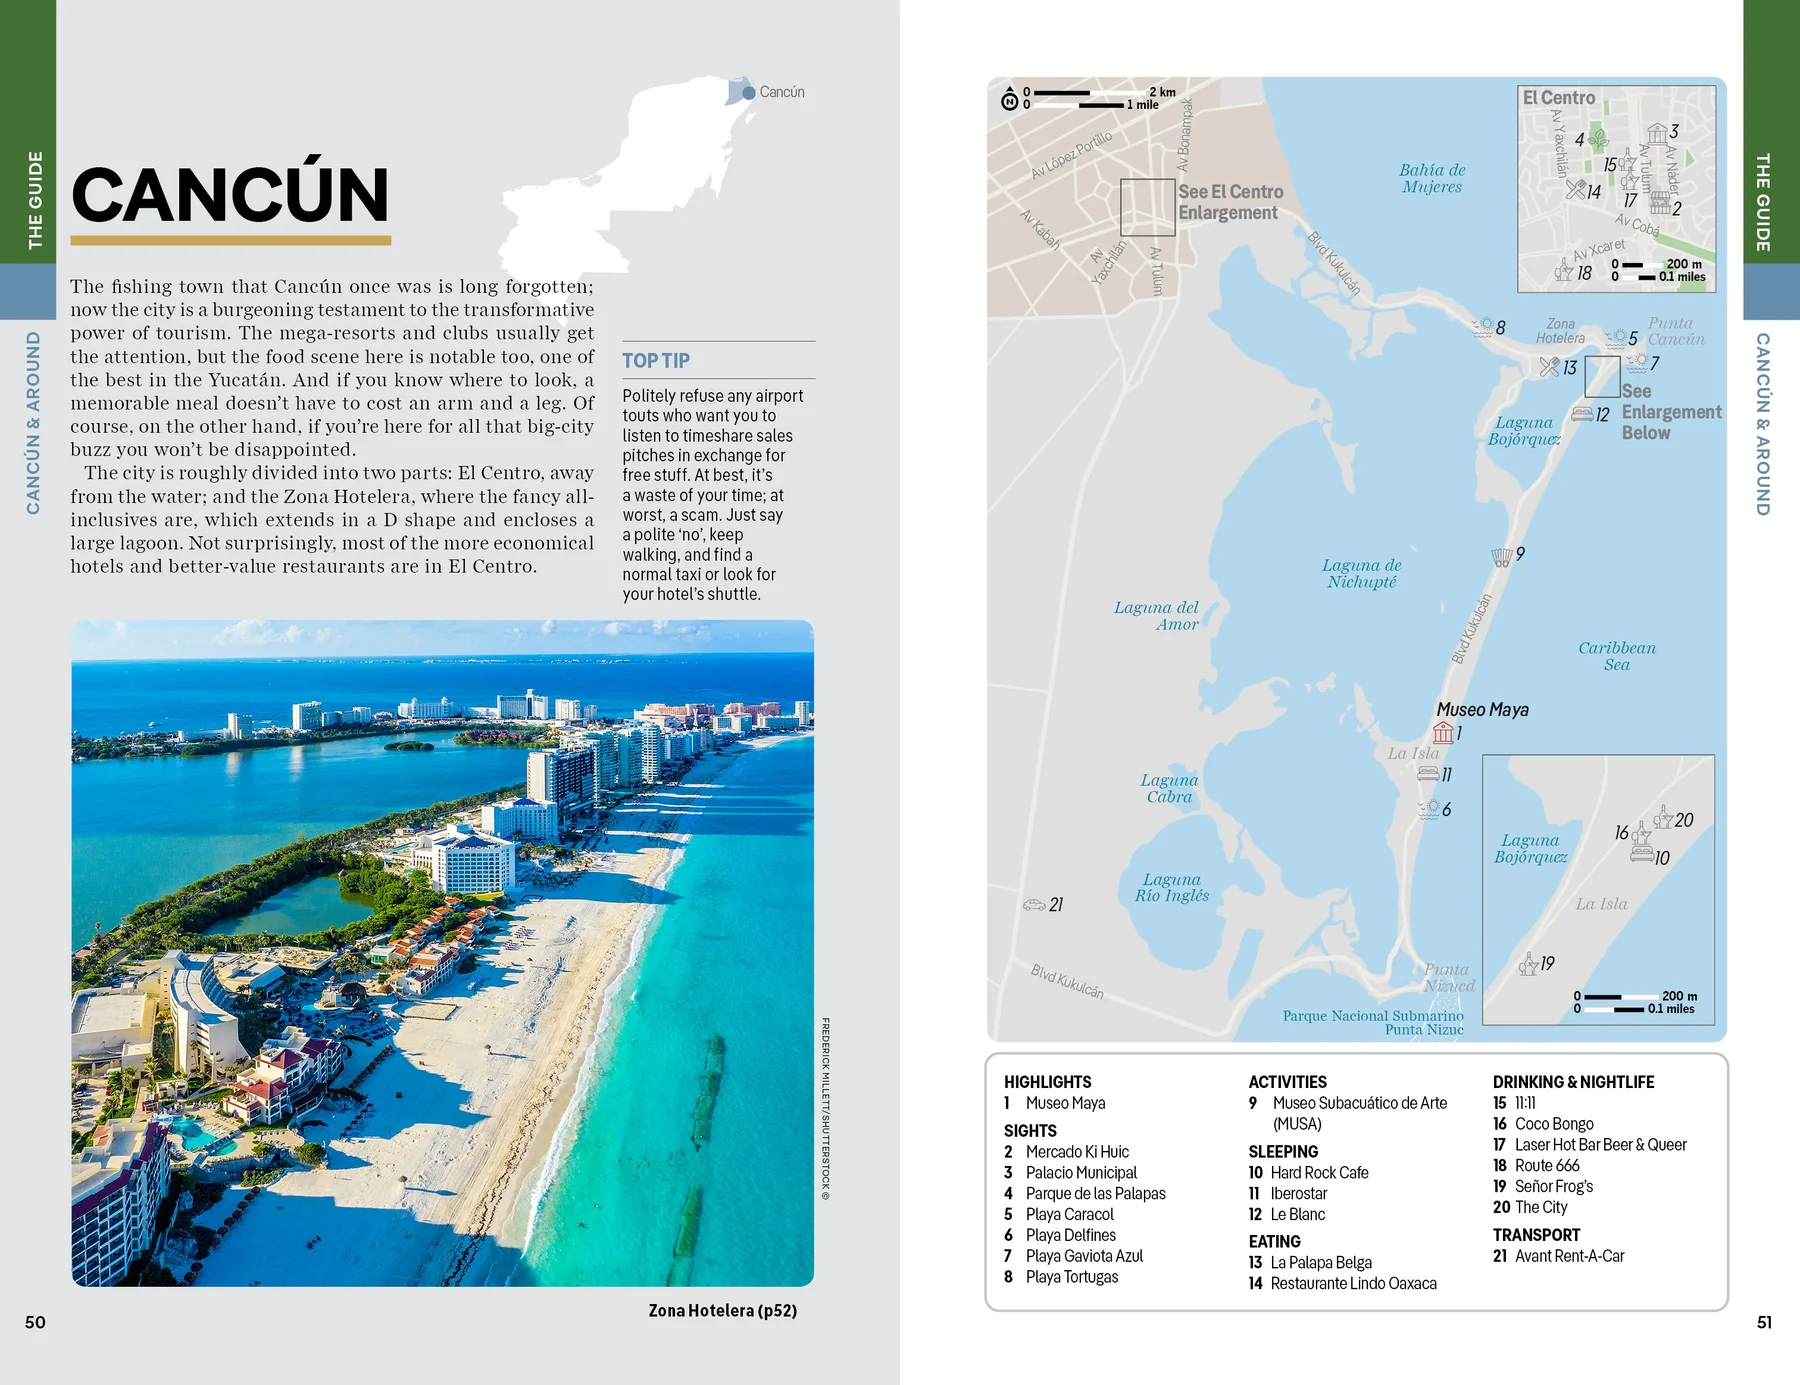 Cancun, Cozumel & the Yucatan Lonely Planet